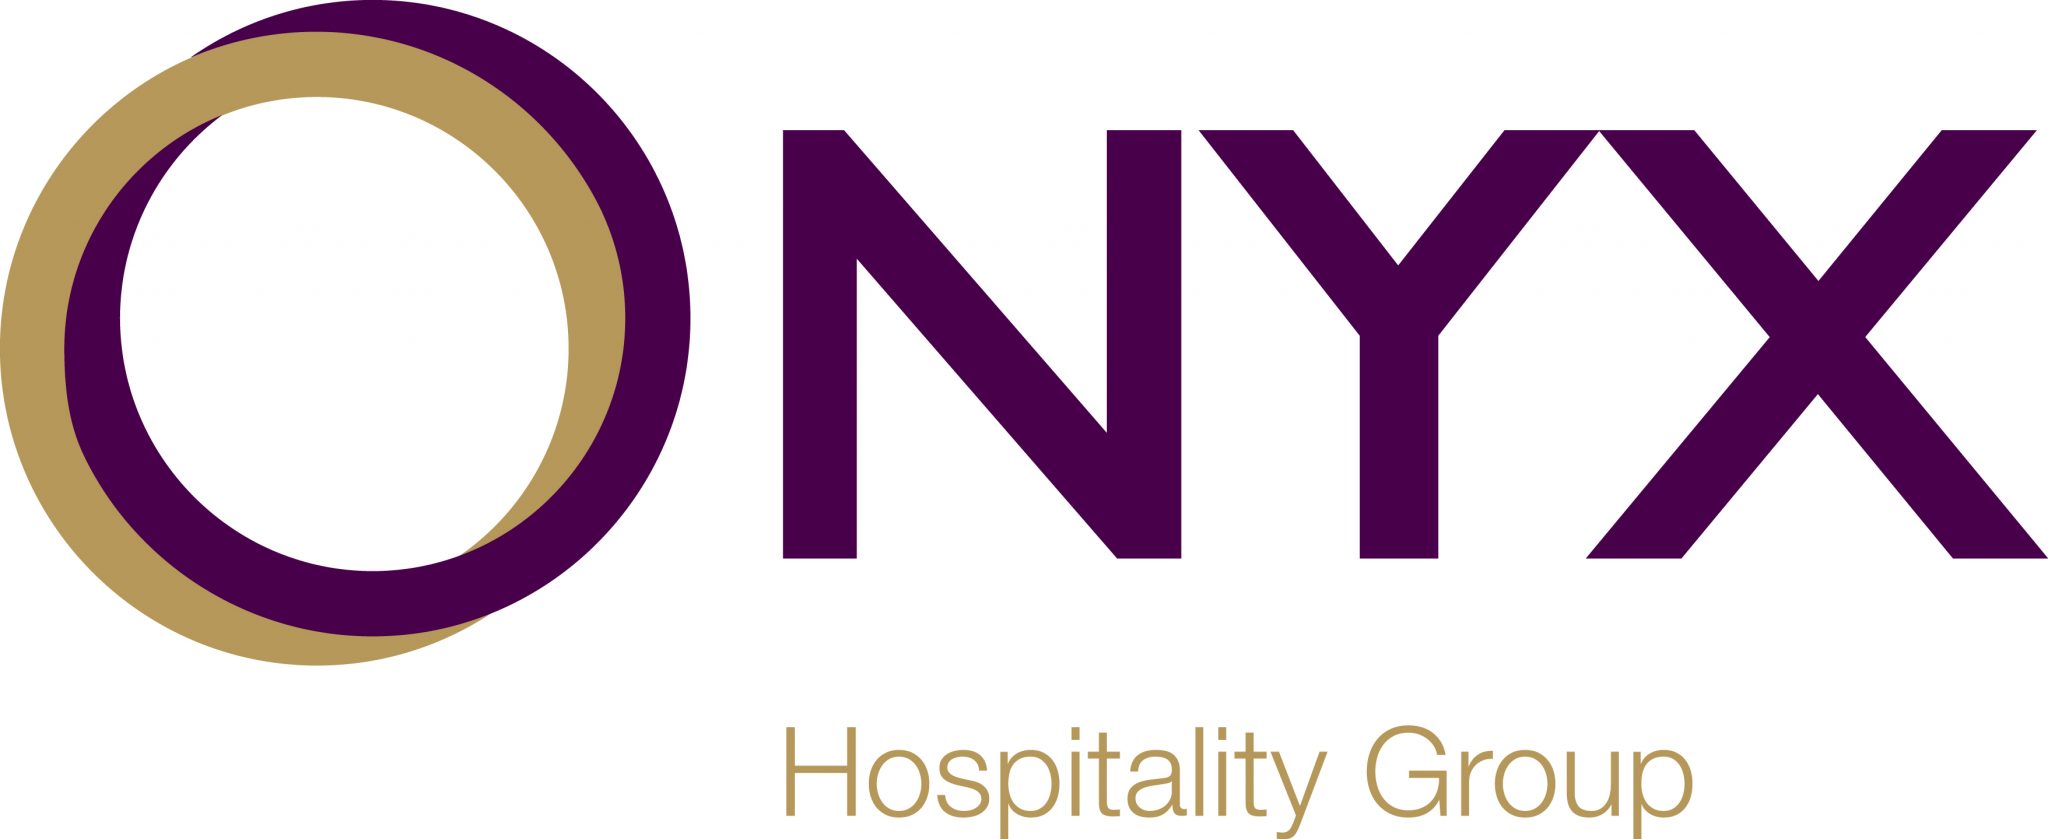 Onyx Hospitality logo